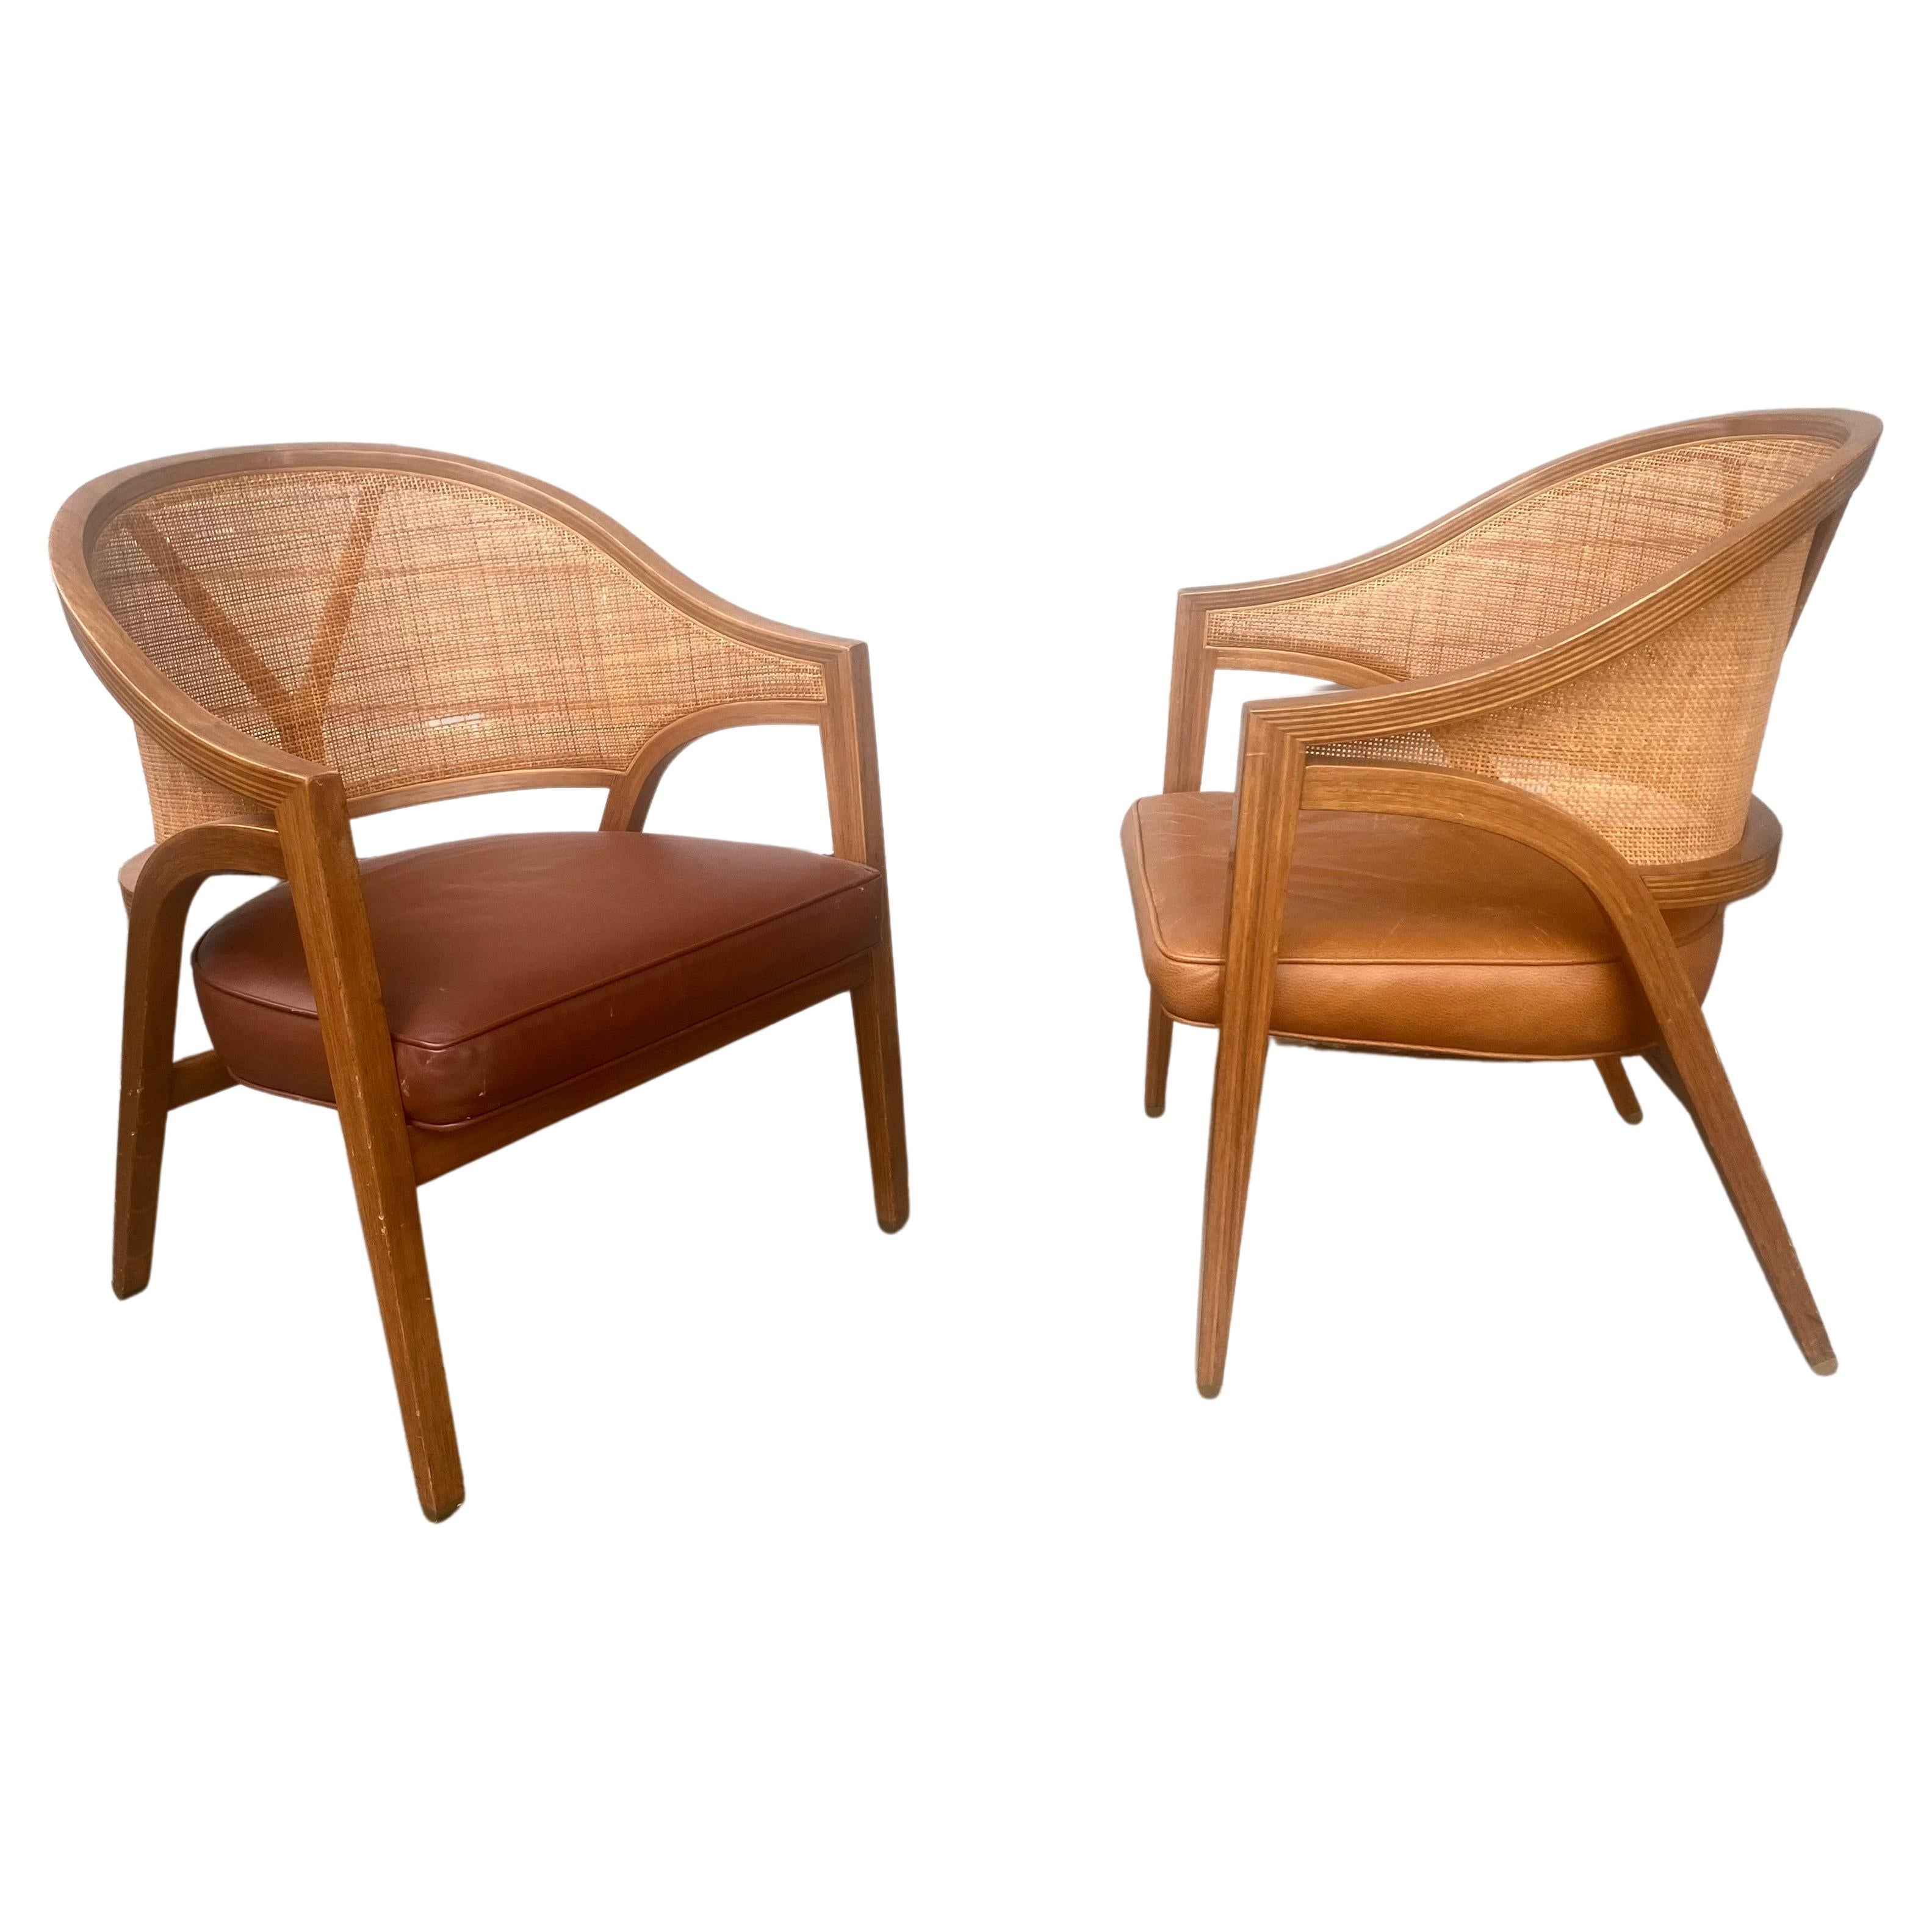 Pair Edward Wormley for Dunbar "Y" Modernist Lounge Chairs